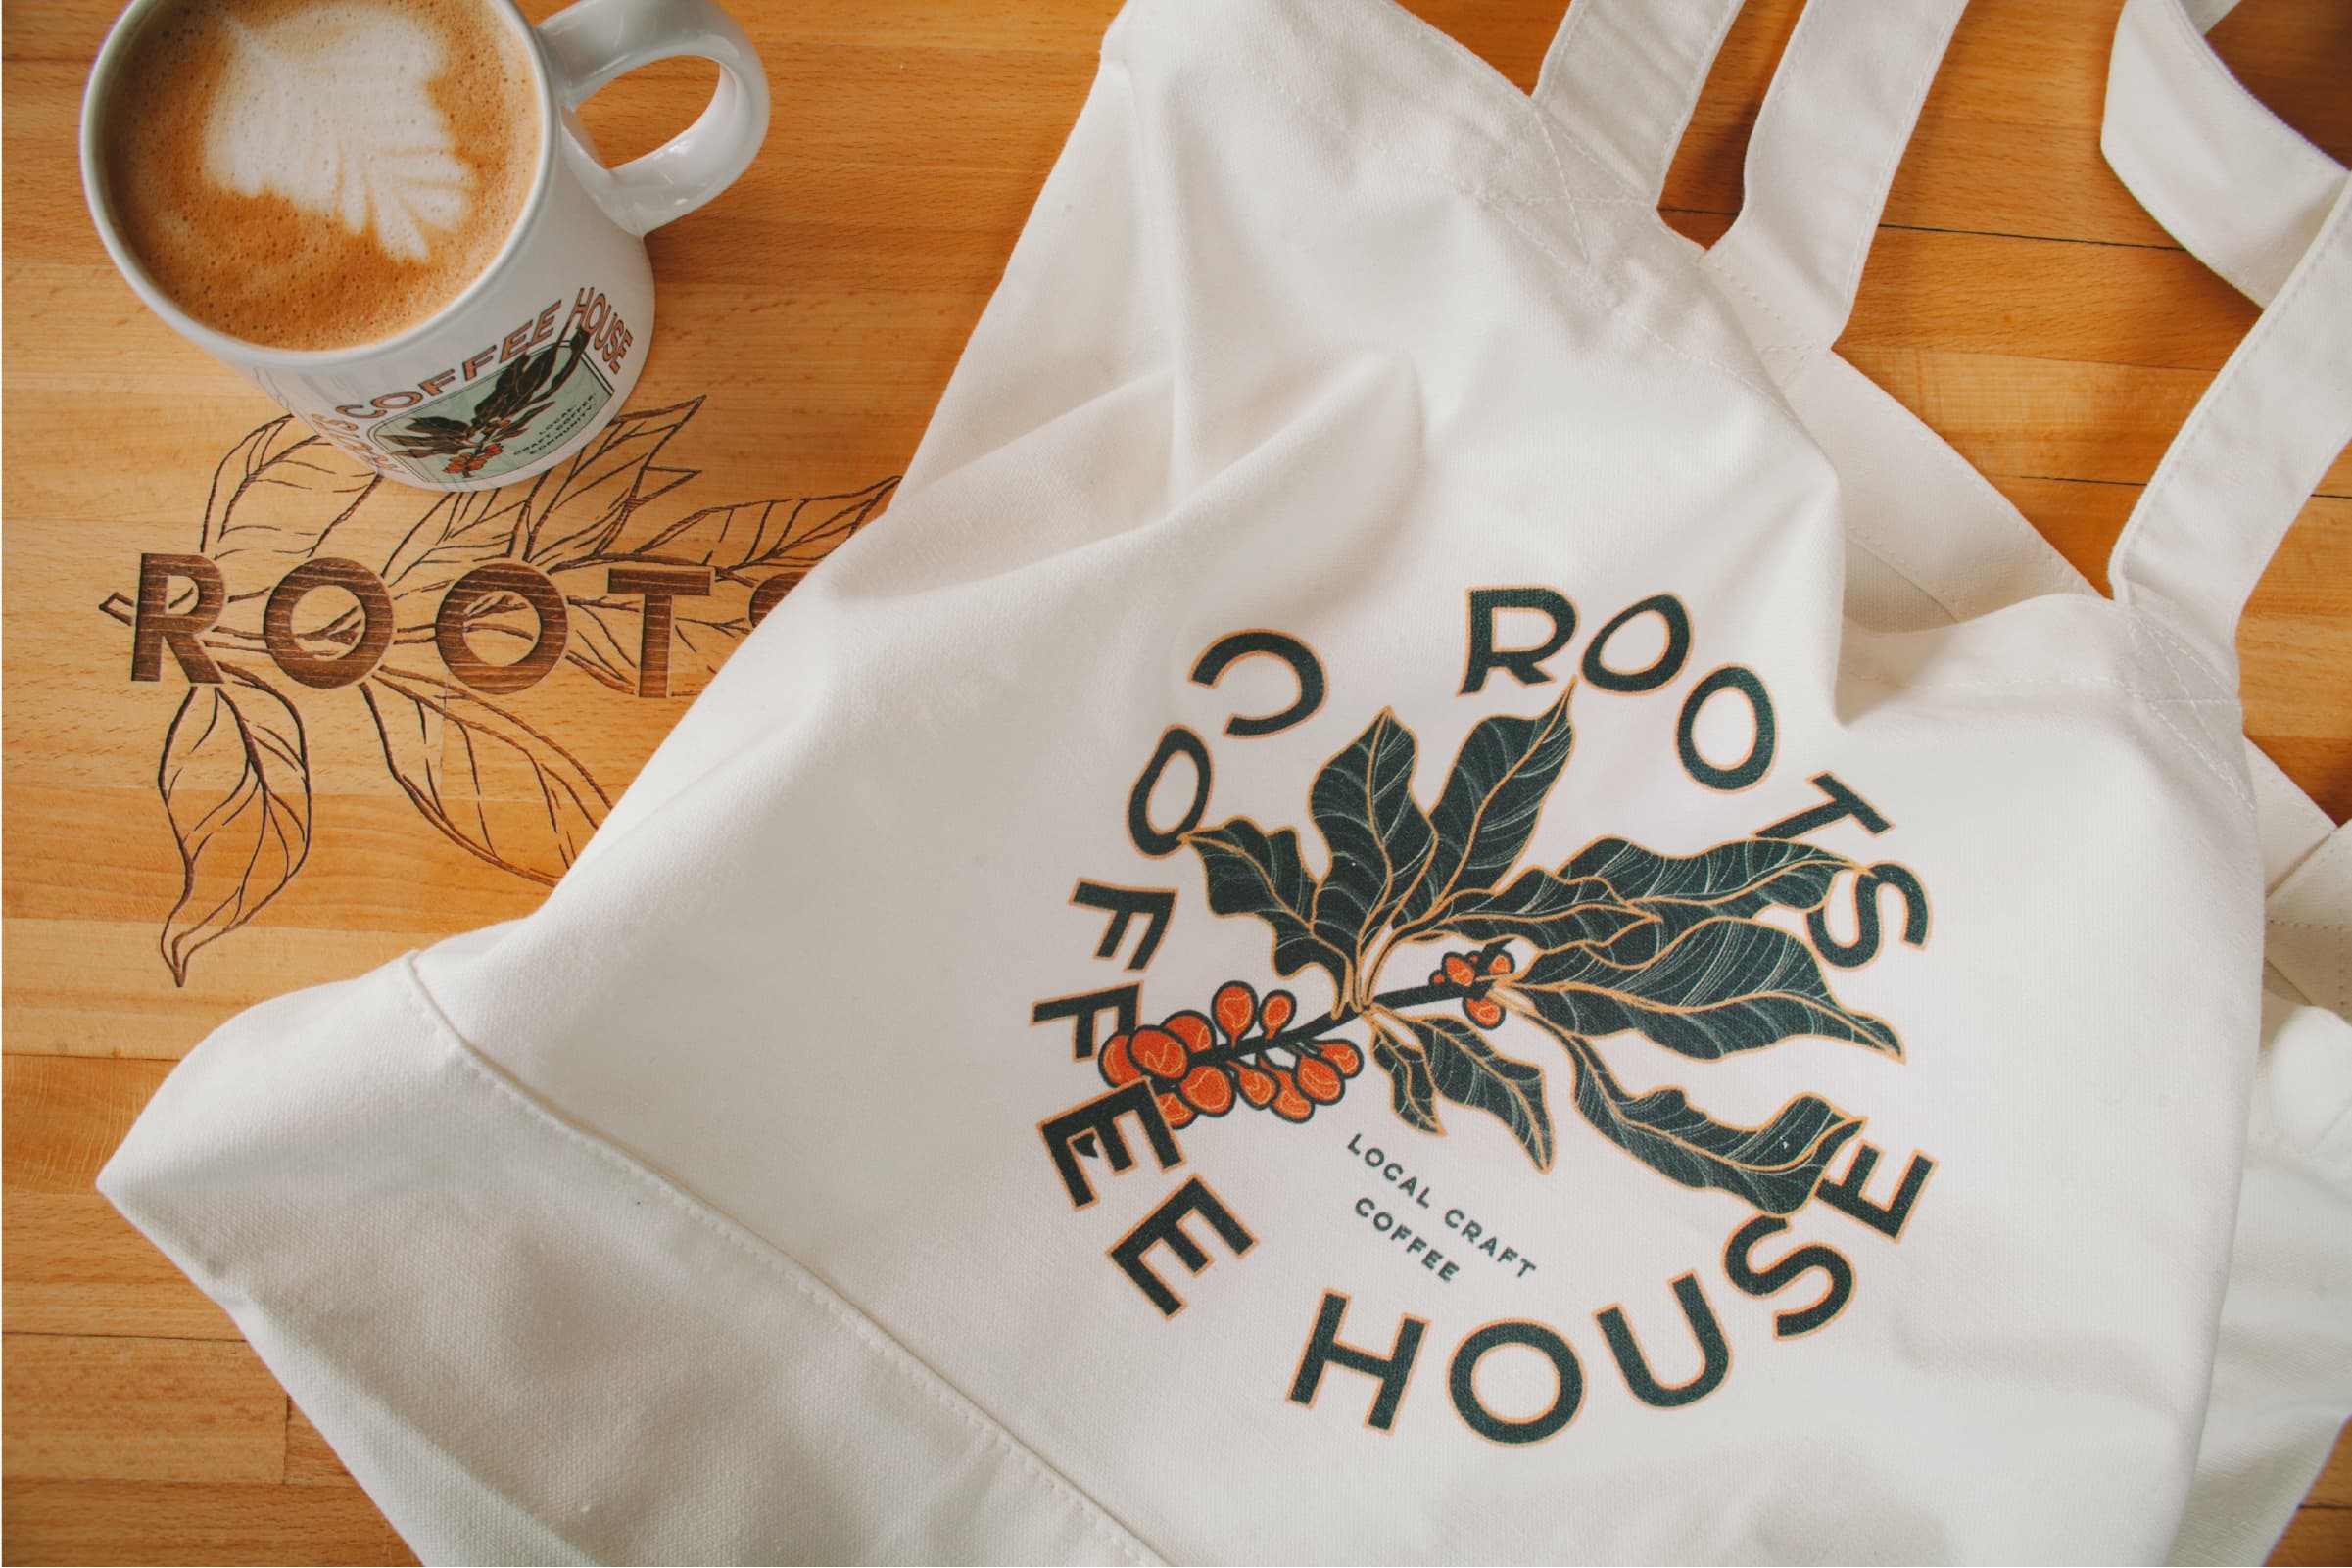 roots coffee house branding design photo of tote bag and coffee mug